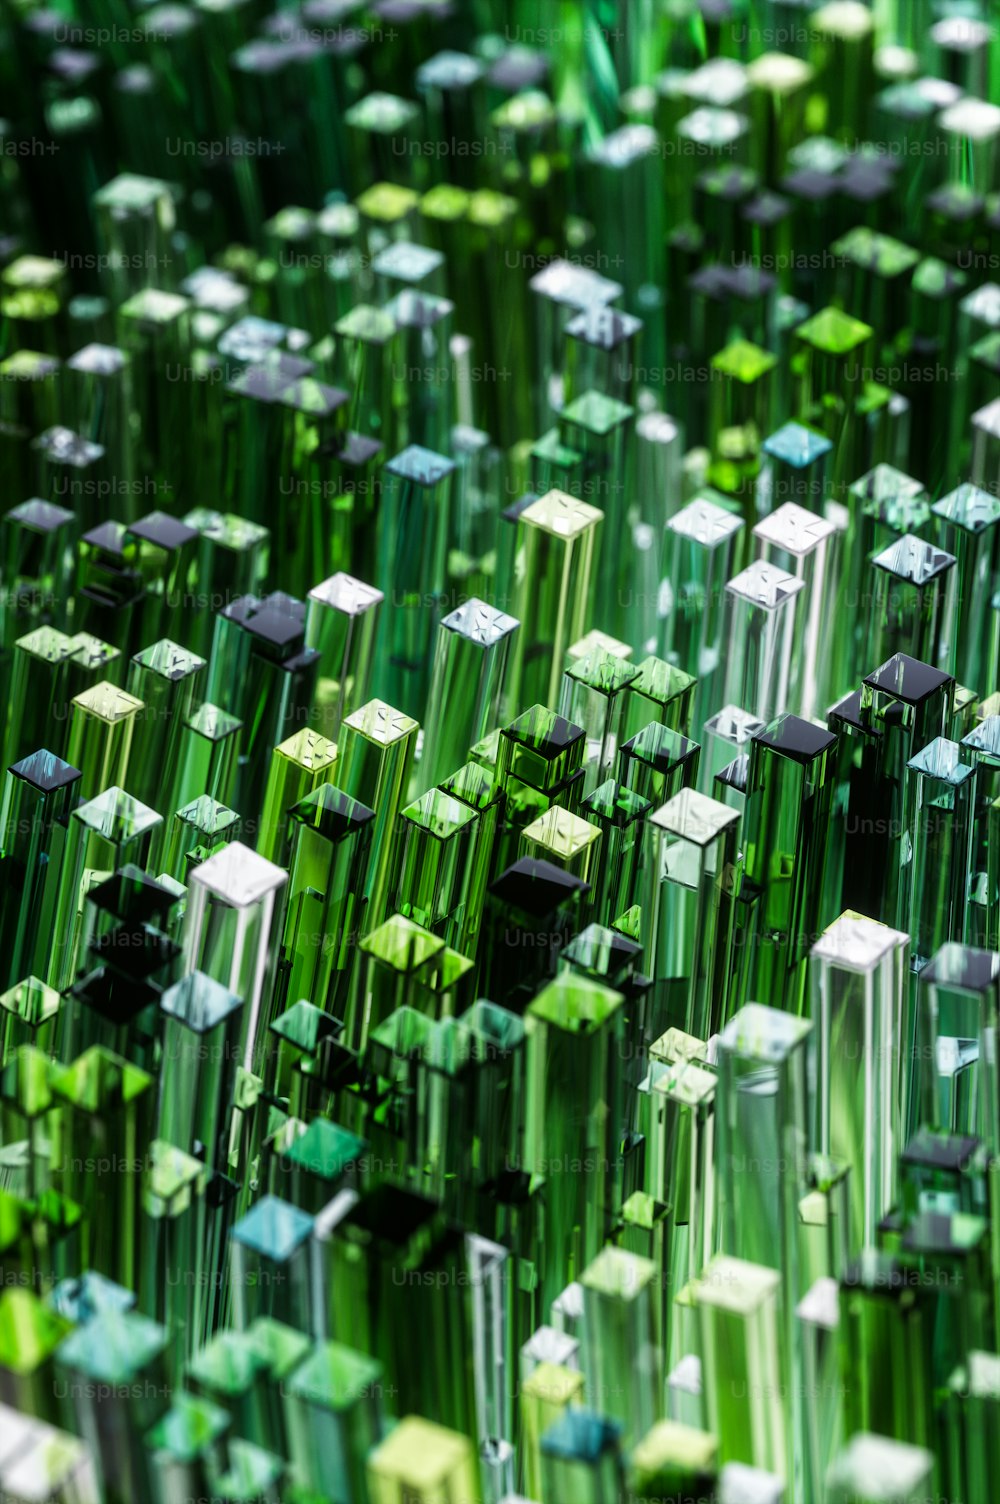 Un grand groupe de blocs de verre verts